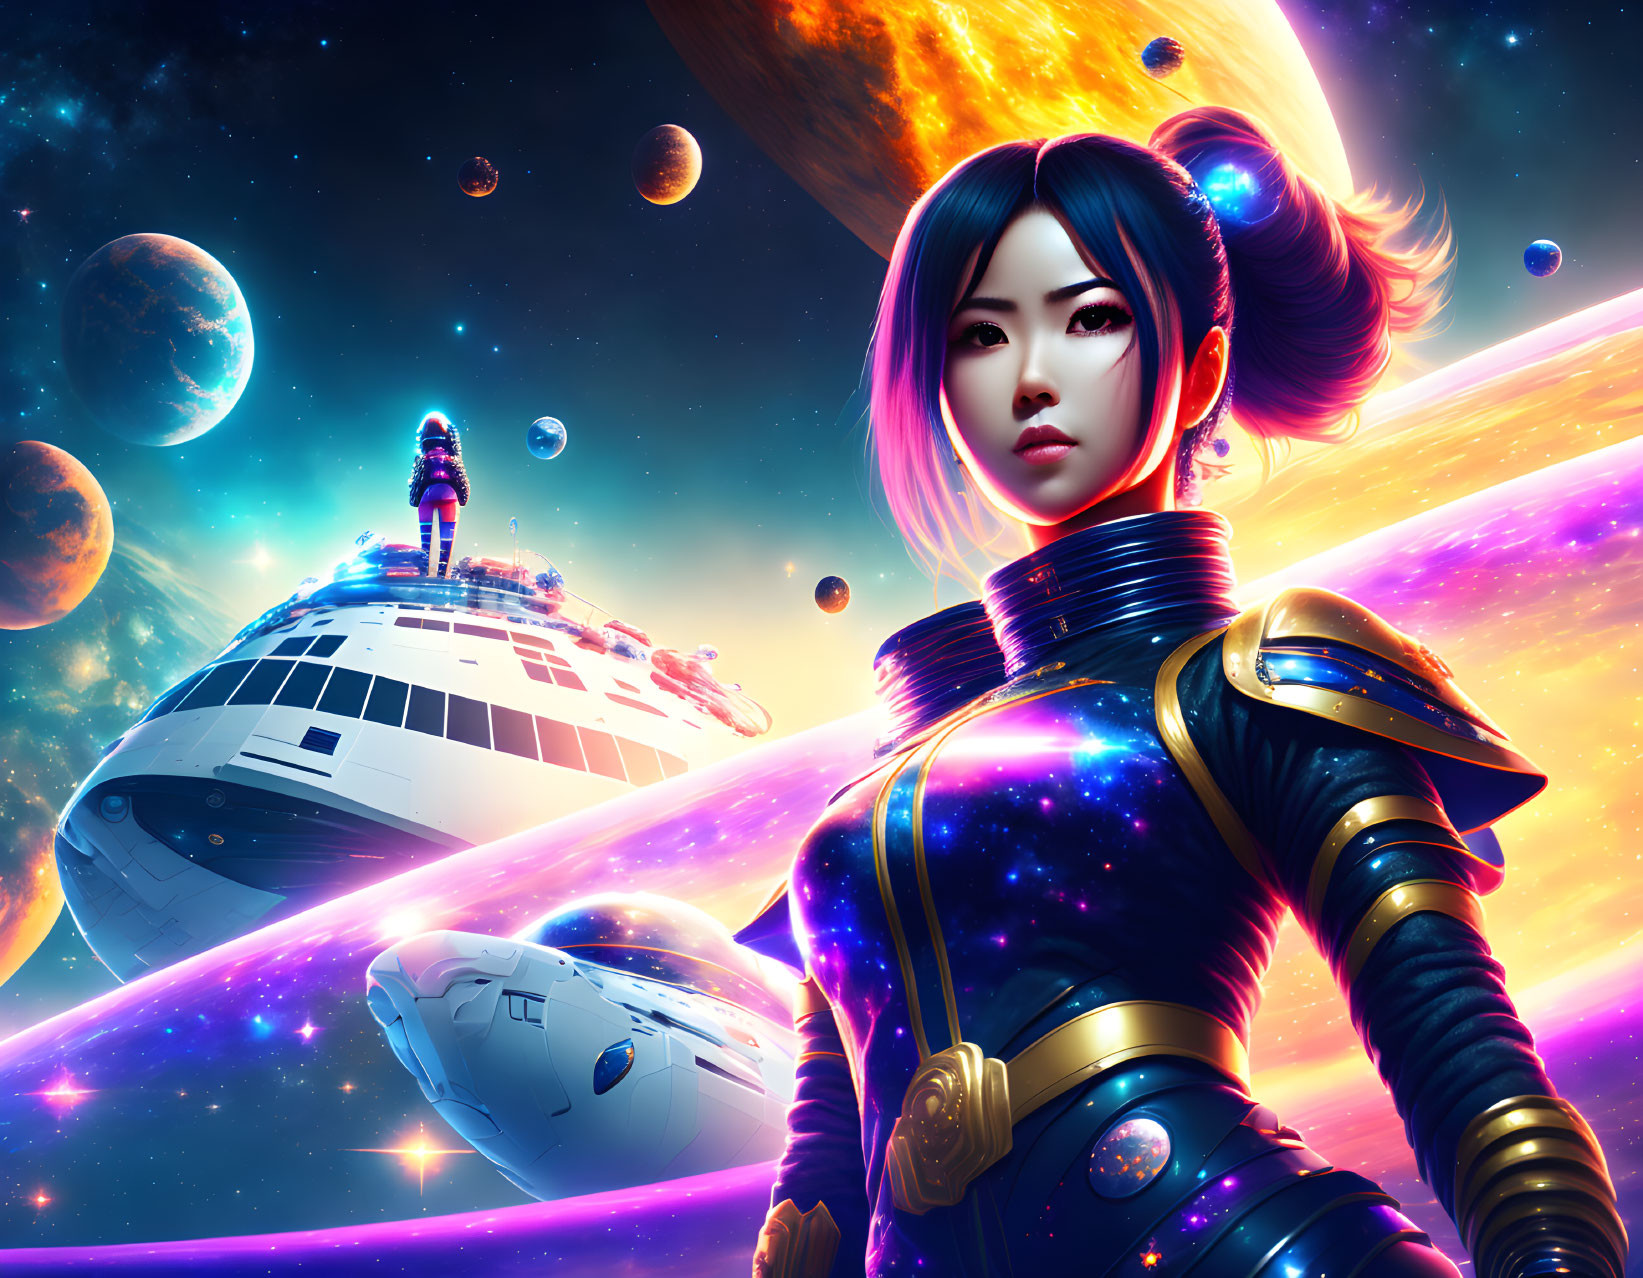 Futuristic female warrior in space armor amidst colorful stellar nebulas